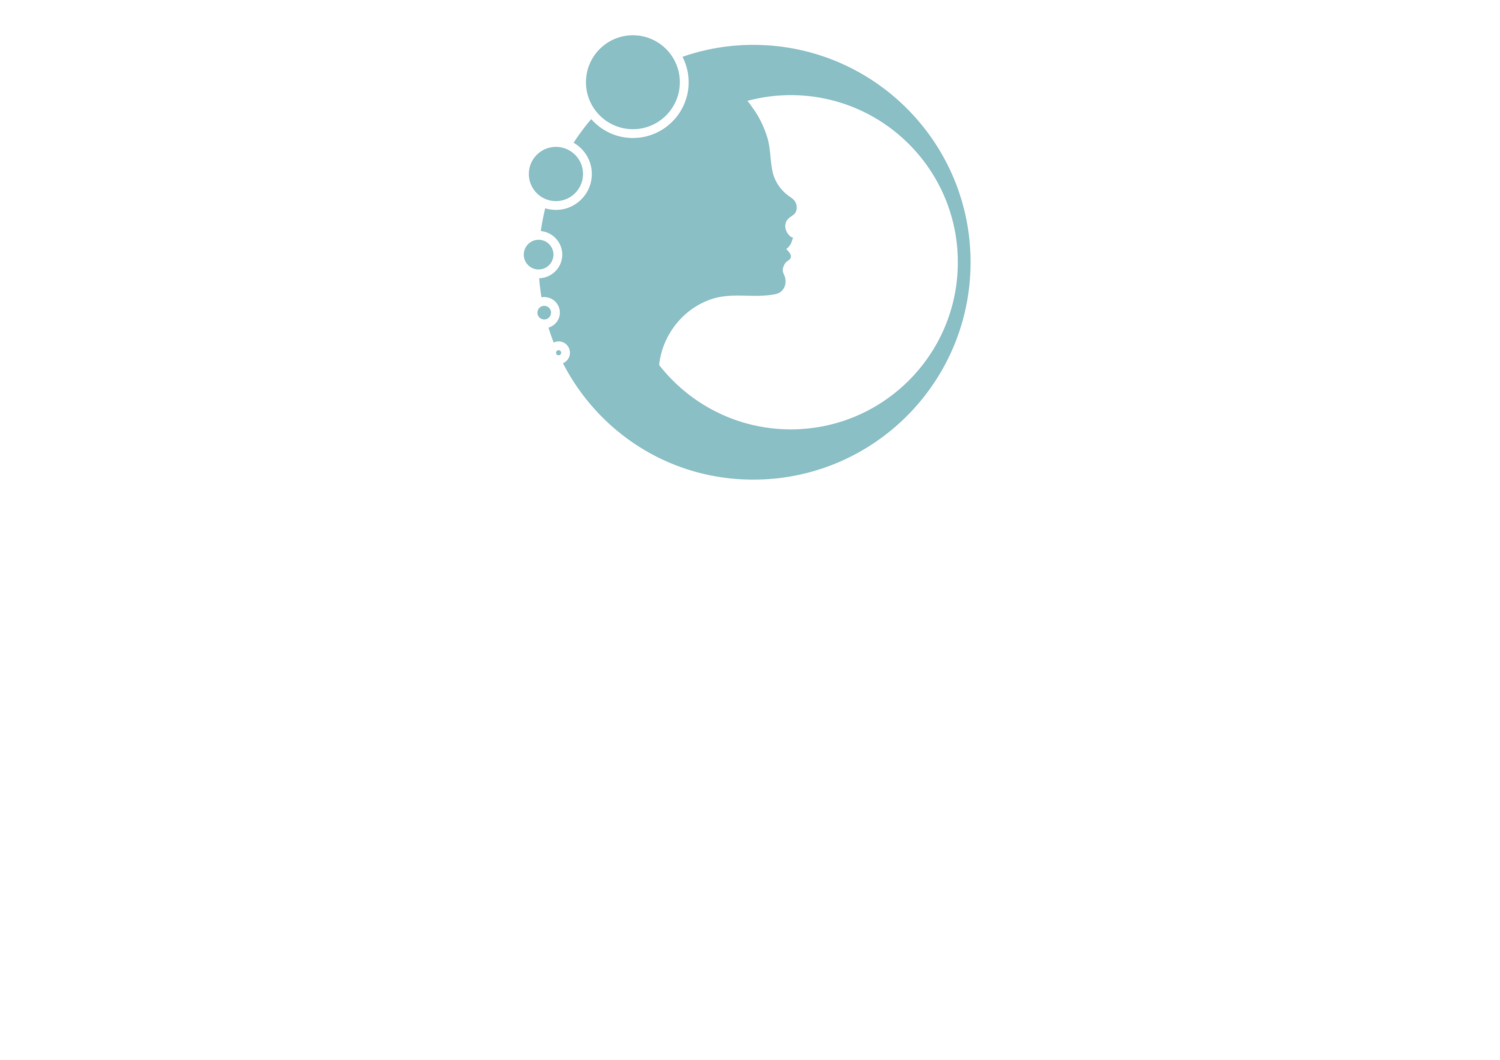 Faq ageless transcending it. Meditation clipart emotionally healthy person